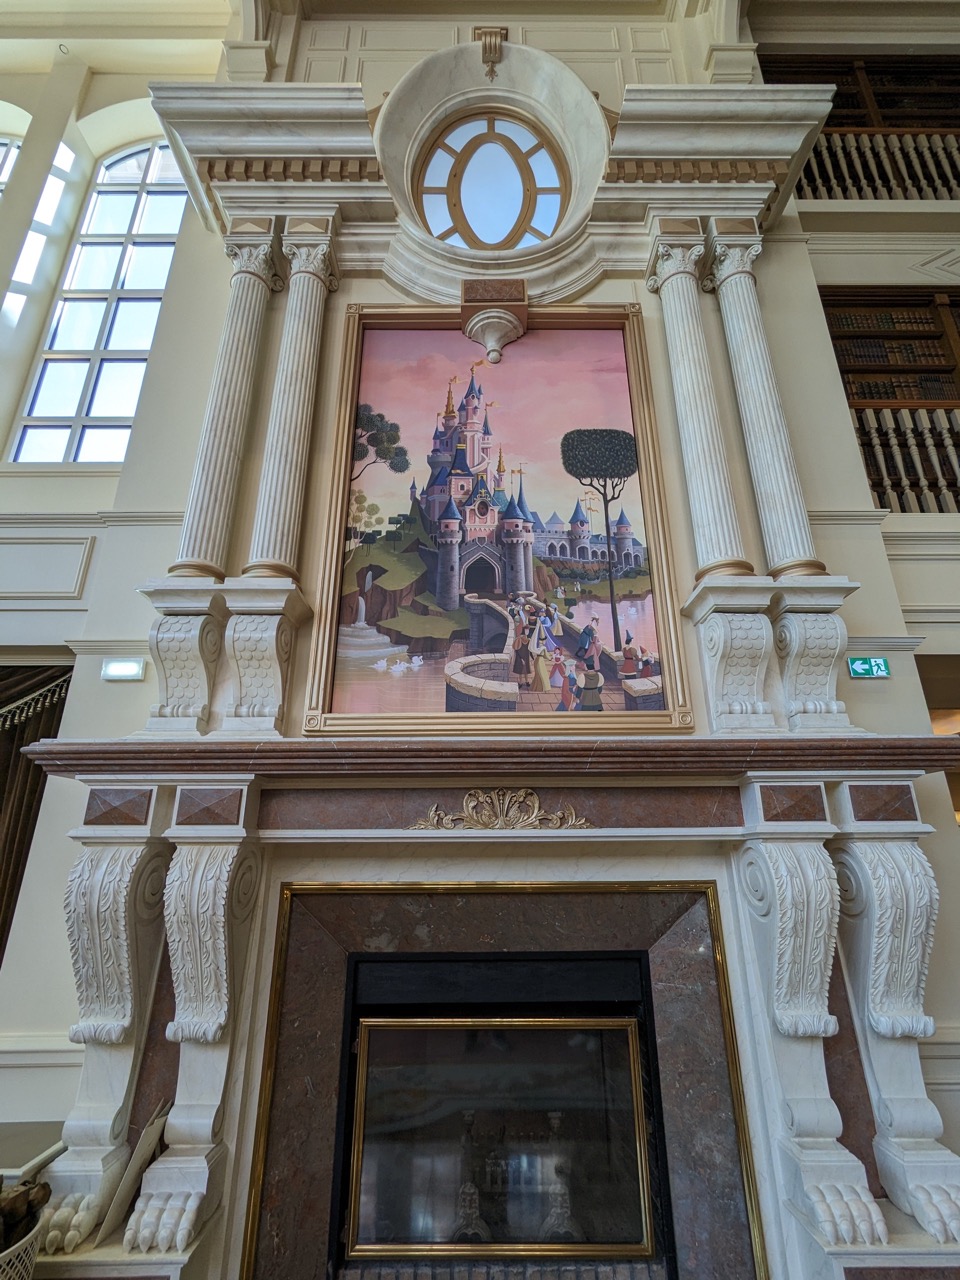 The newly remodeled Disneyland hotel